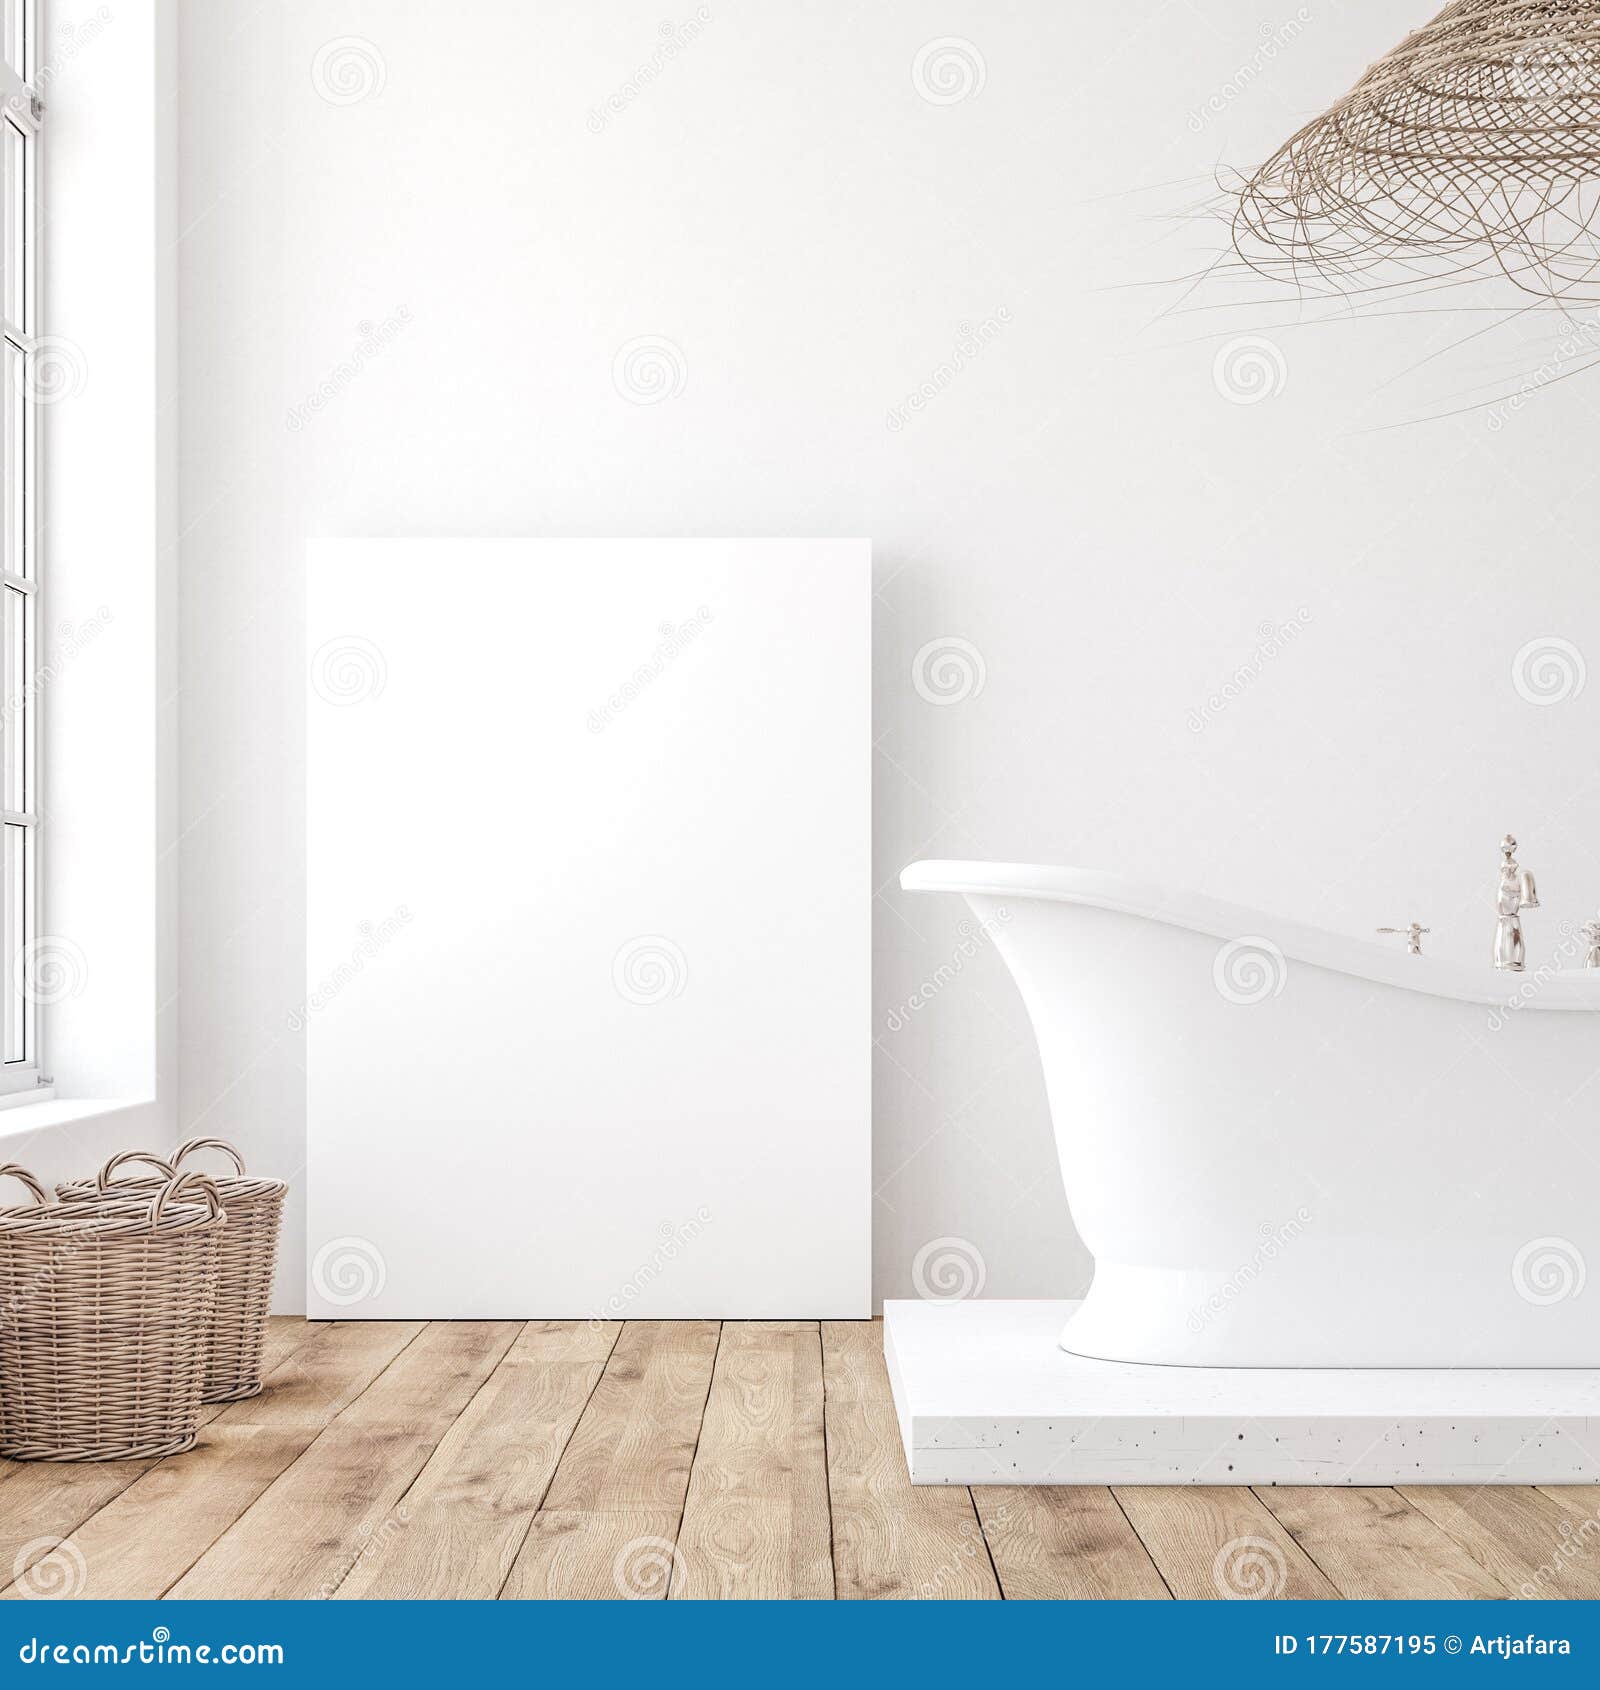 Download Mockup Canvas In Minimalist White Bathroom Interior Stock Illustration Illustration Of Bright Frame 177587195